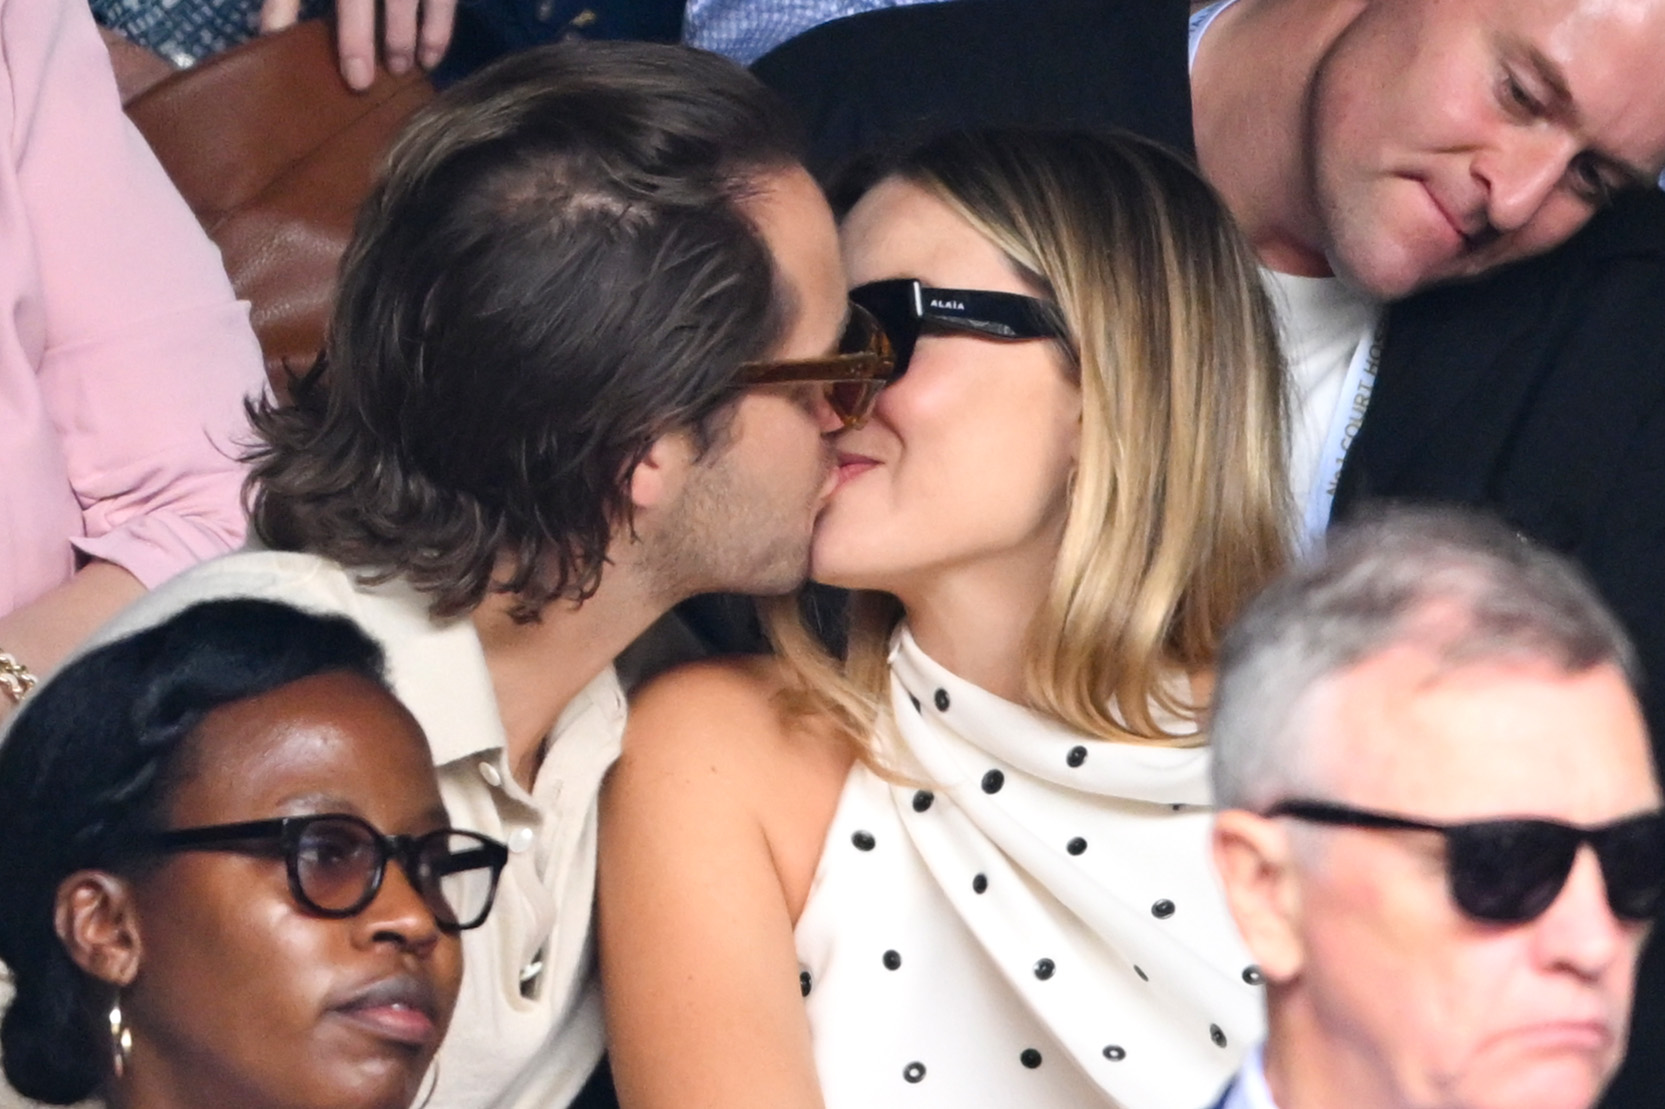 Margot and her husband Tom enjoyed a kiss